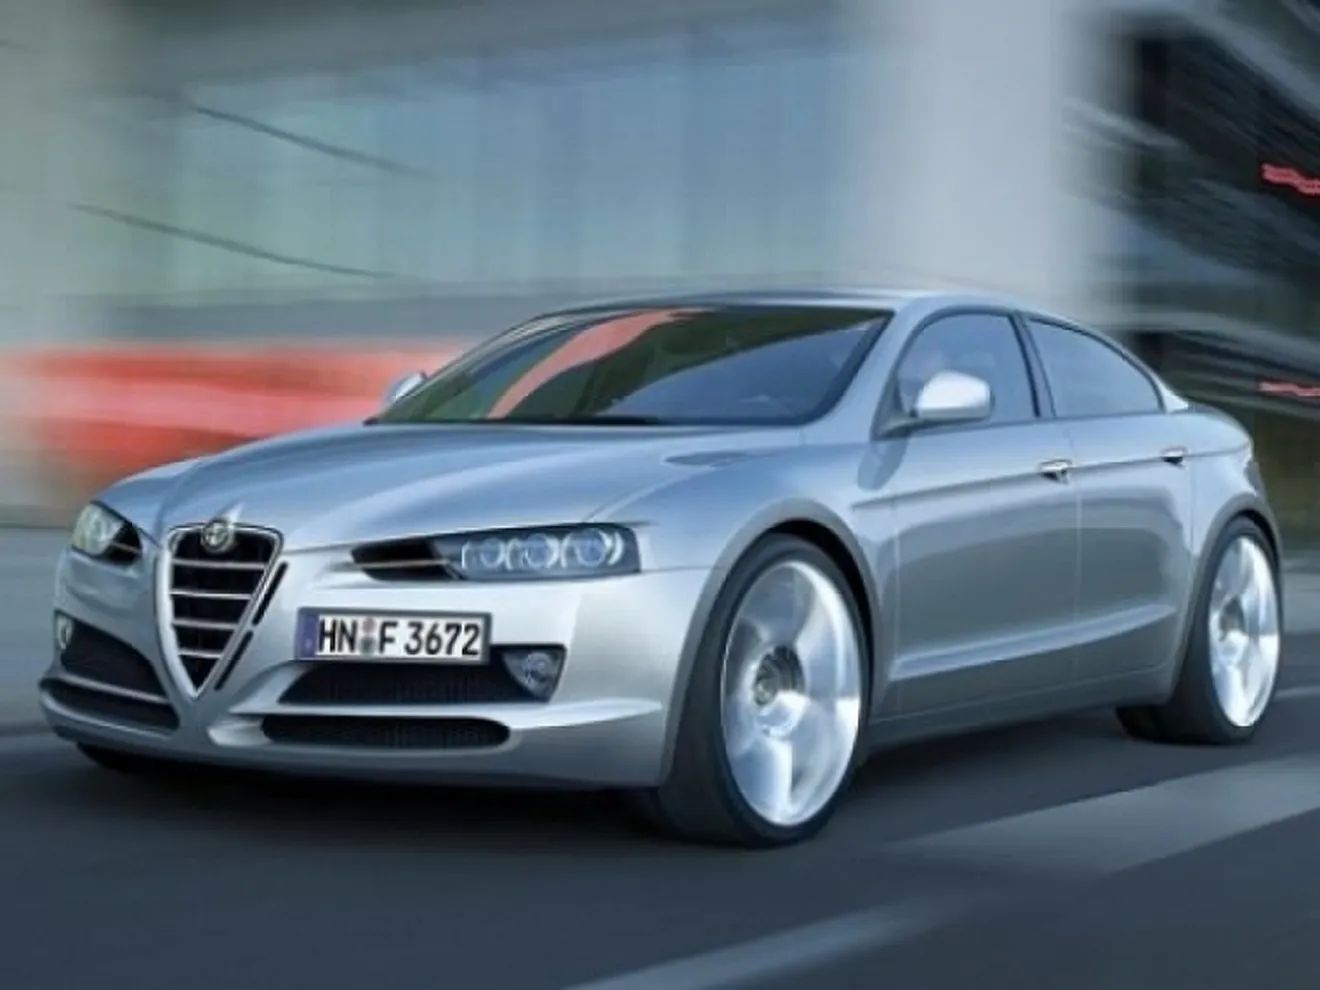 Alfa Romeo trabaja en un nuevo motor V8 MultiAir